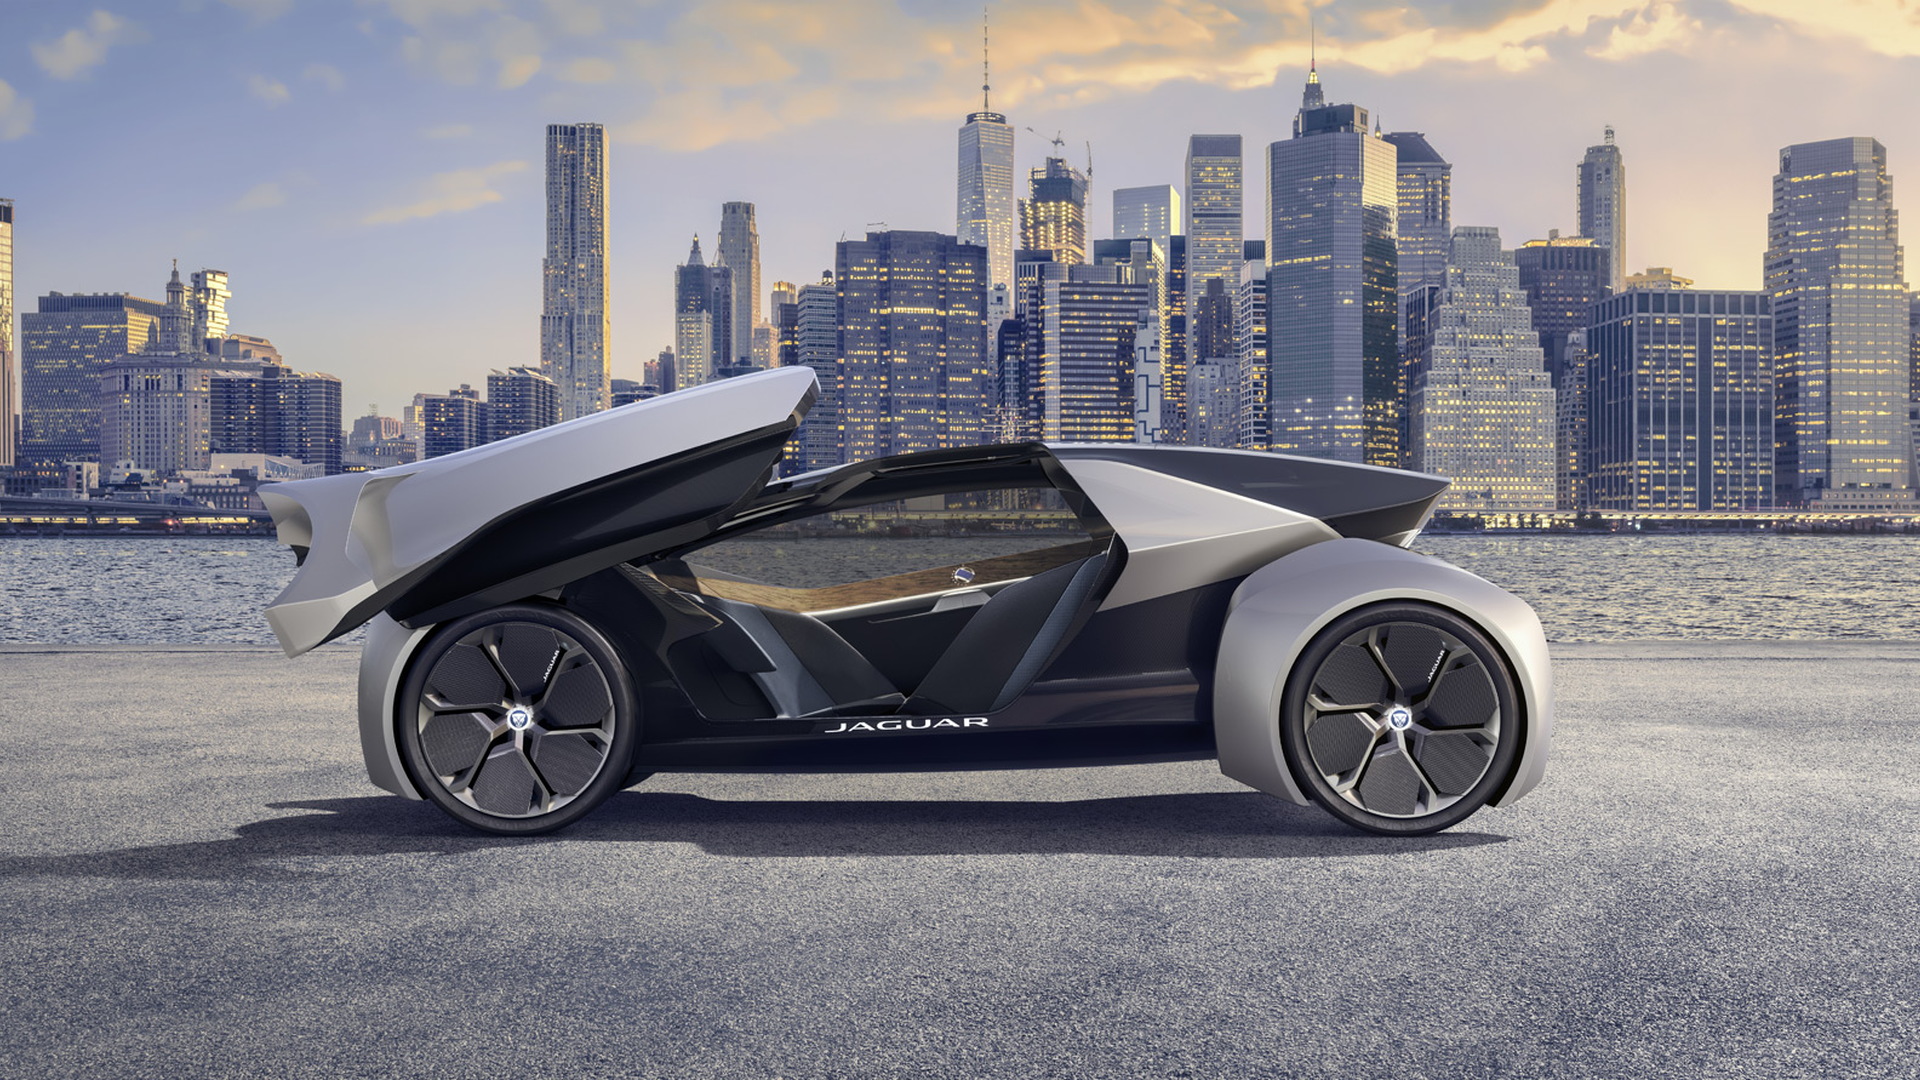 Jaguar Future-Type concept